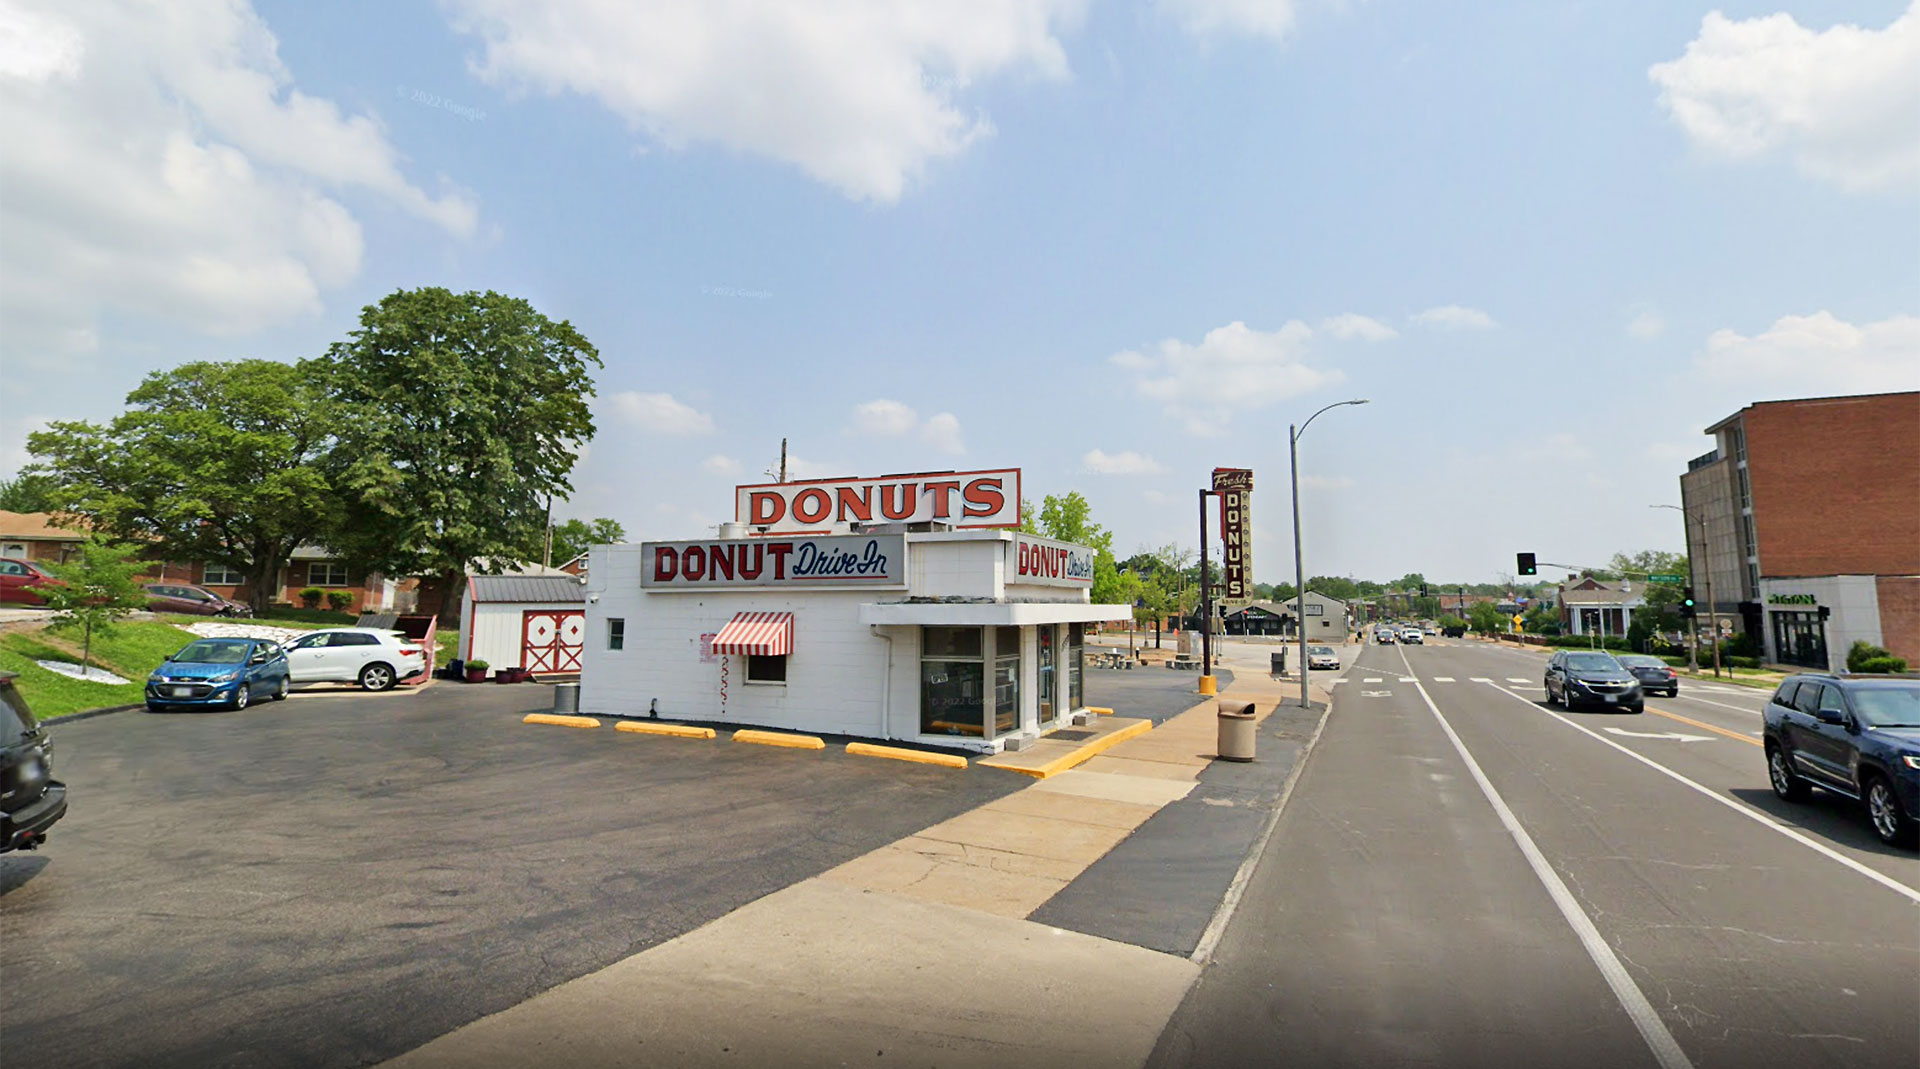 donut drive-in's original location in lindenwood park